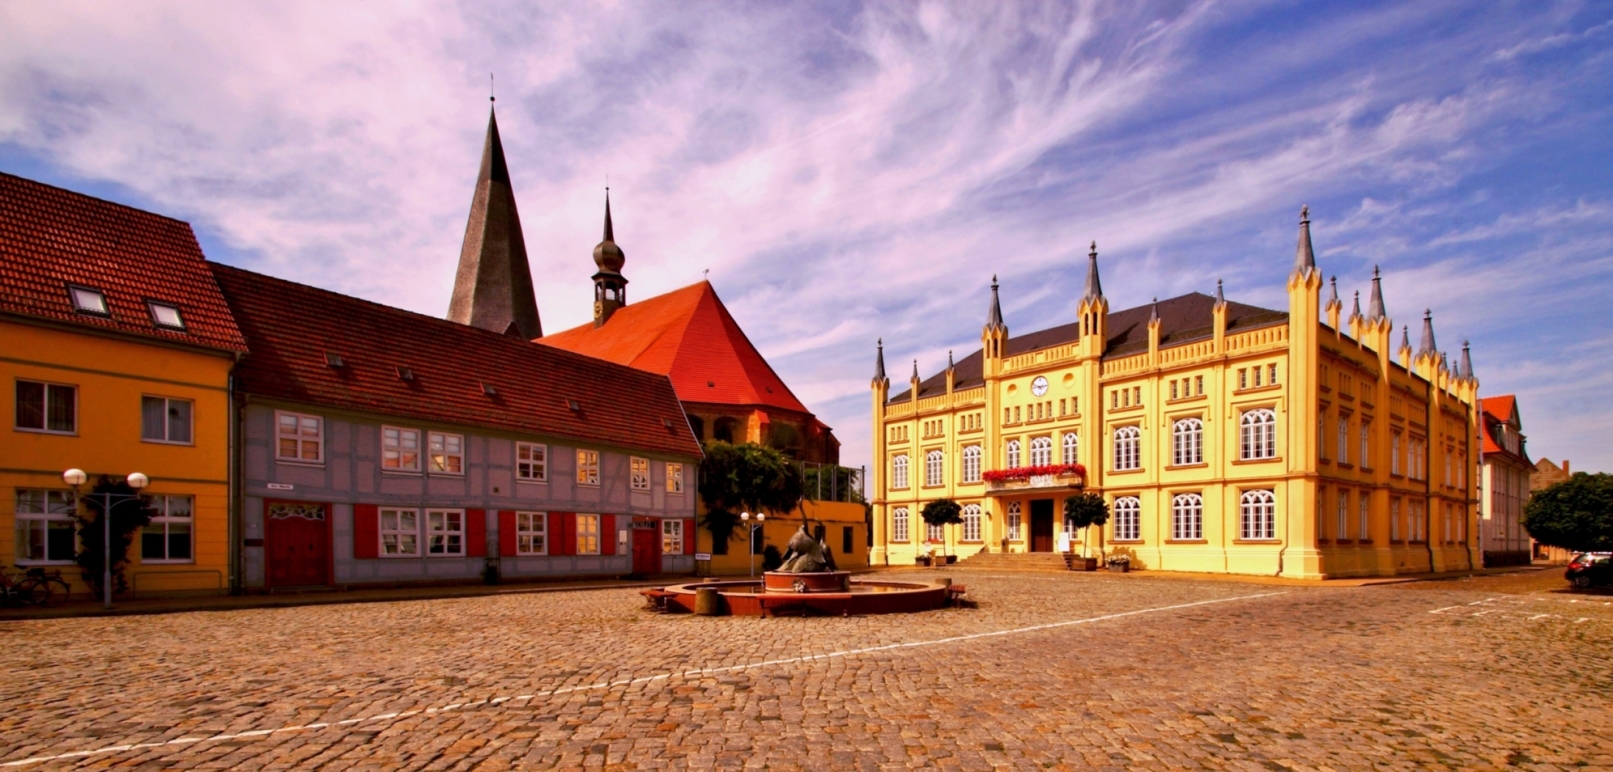 Historischer Marktplatz Bützow 2